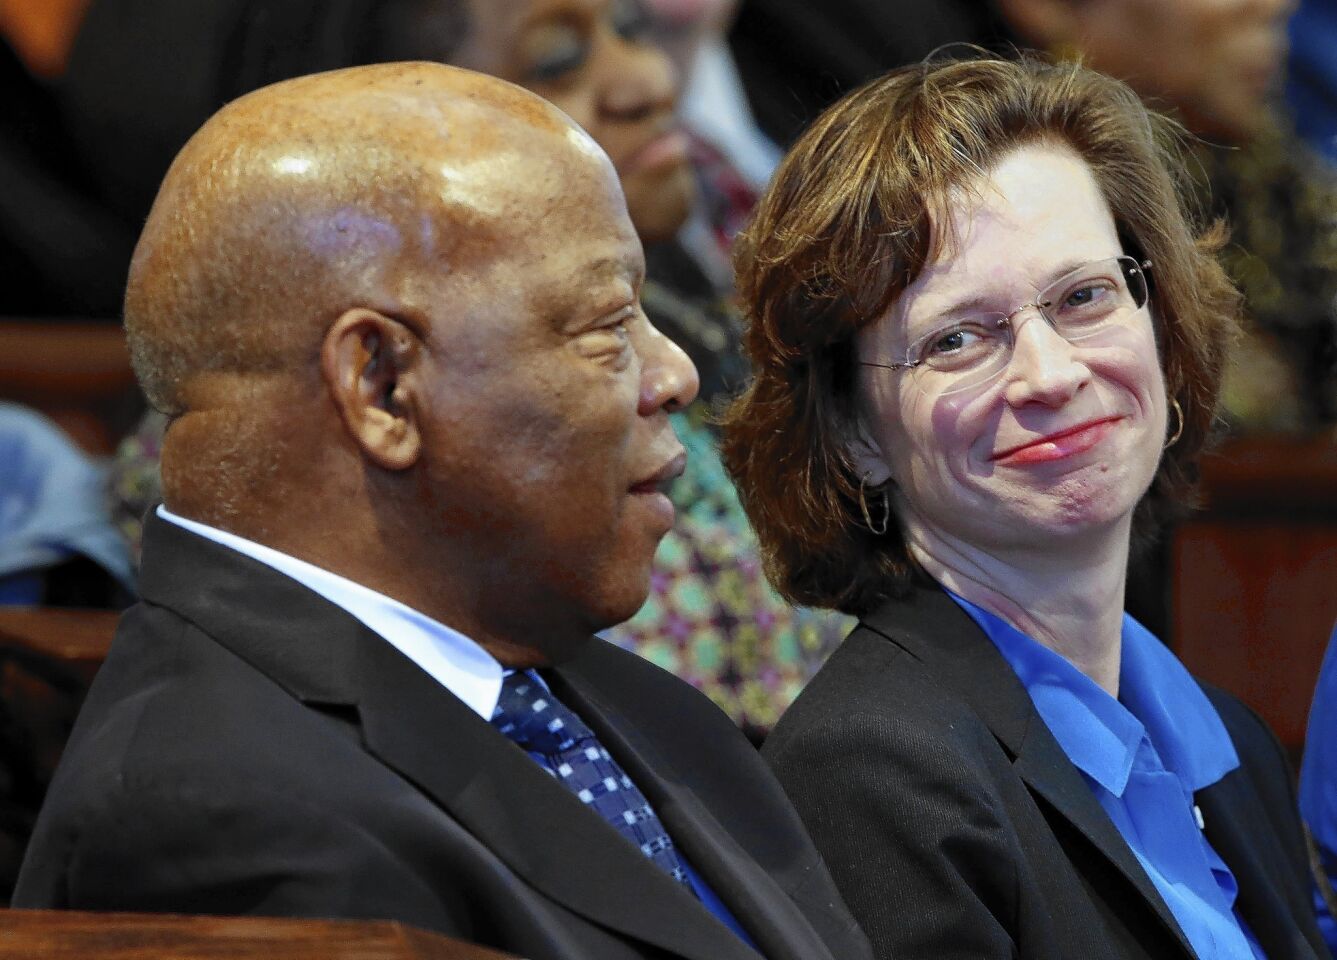 Rep. John Lewis sits next to Michelle Nunn, then a contender for Senate